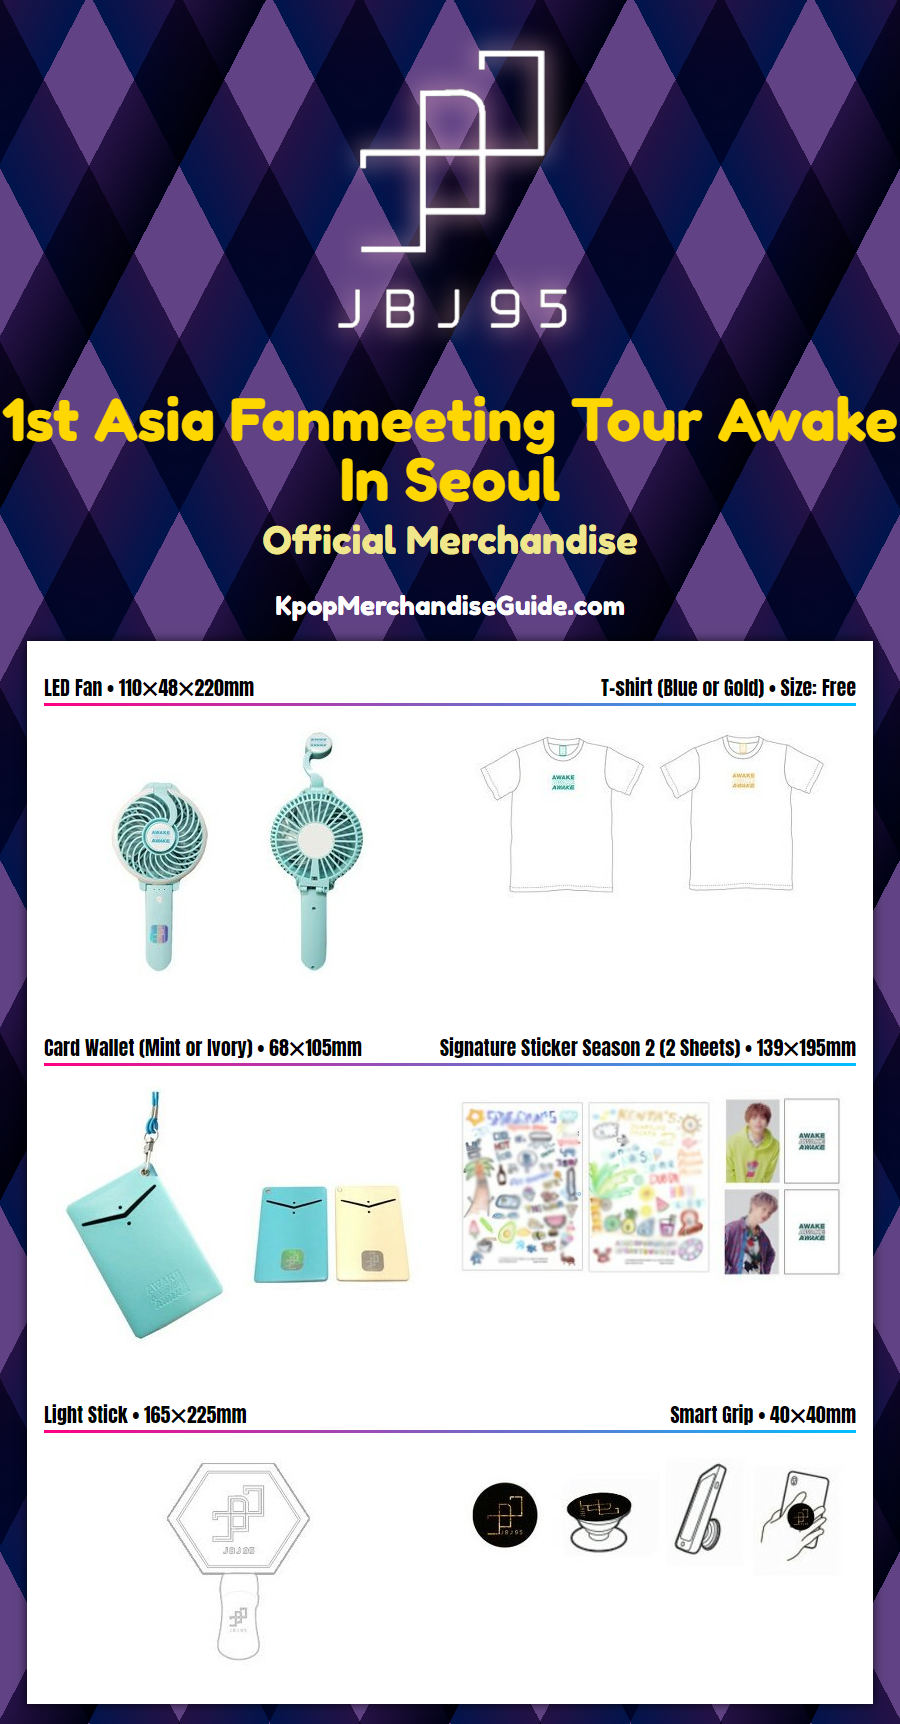 JBJ95 1st Asia Fanmeeting Tour Awake In Seoul Merchandise